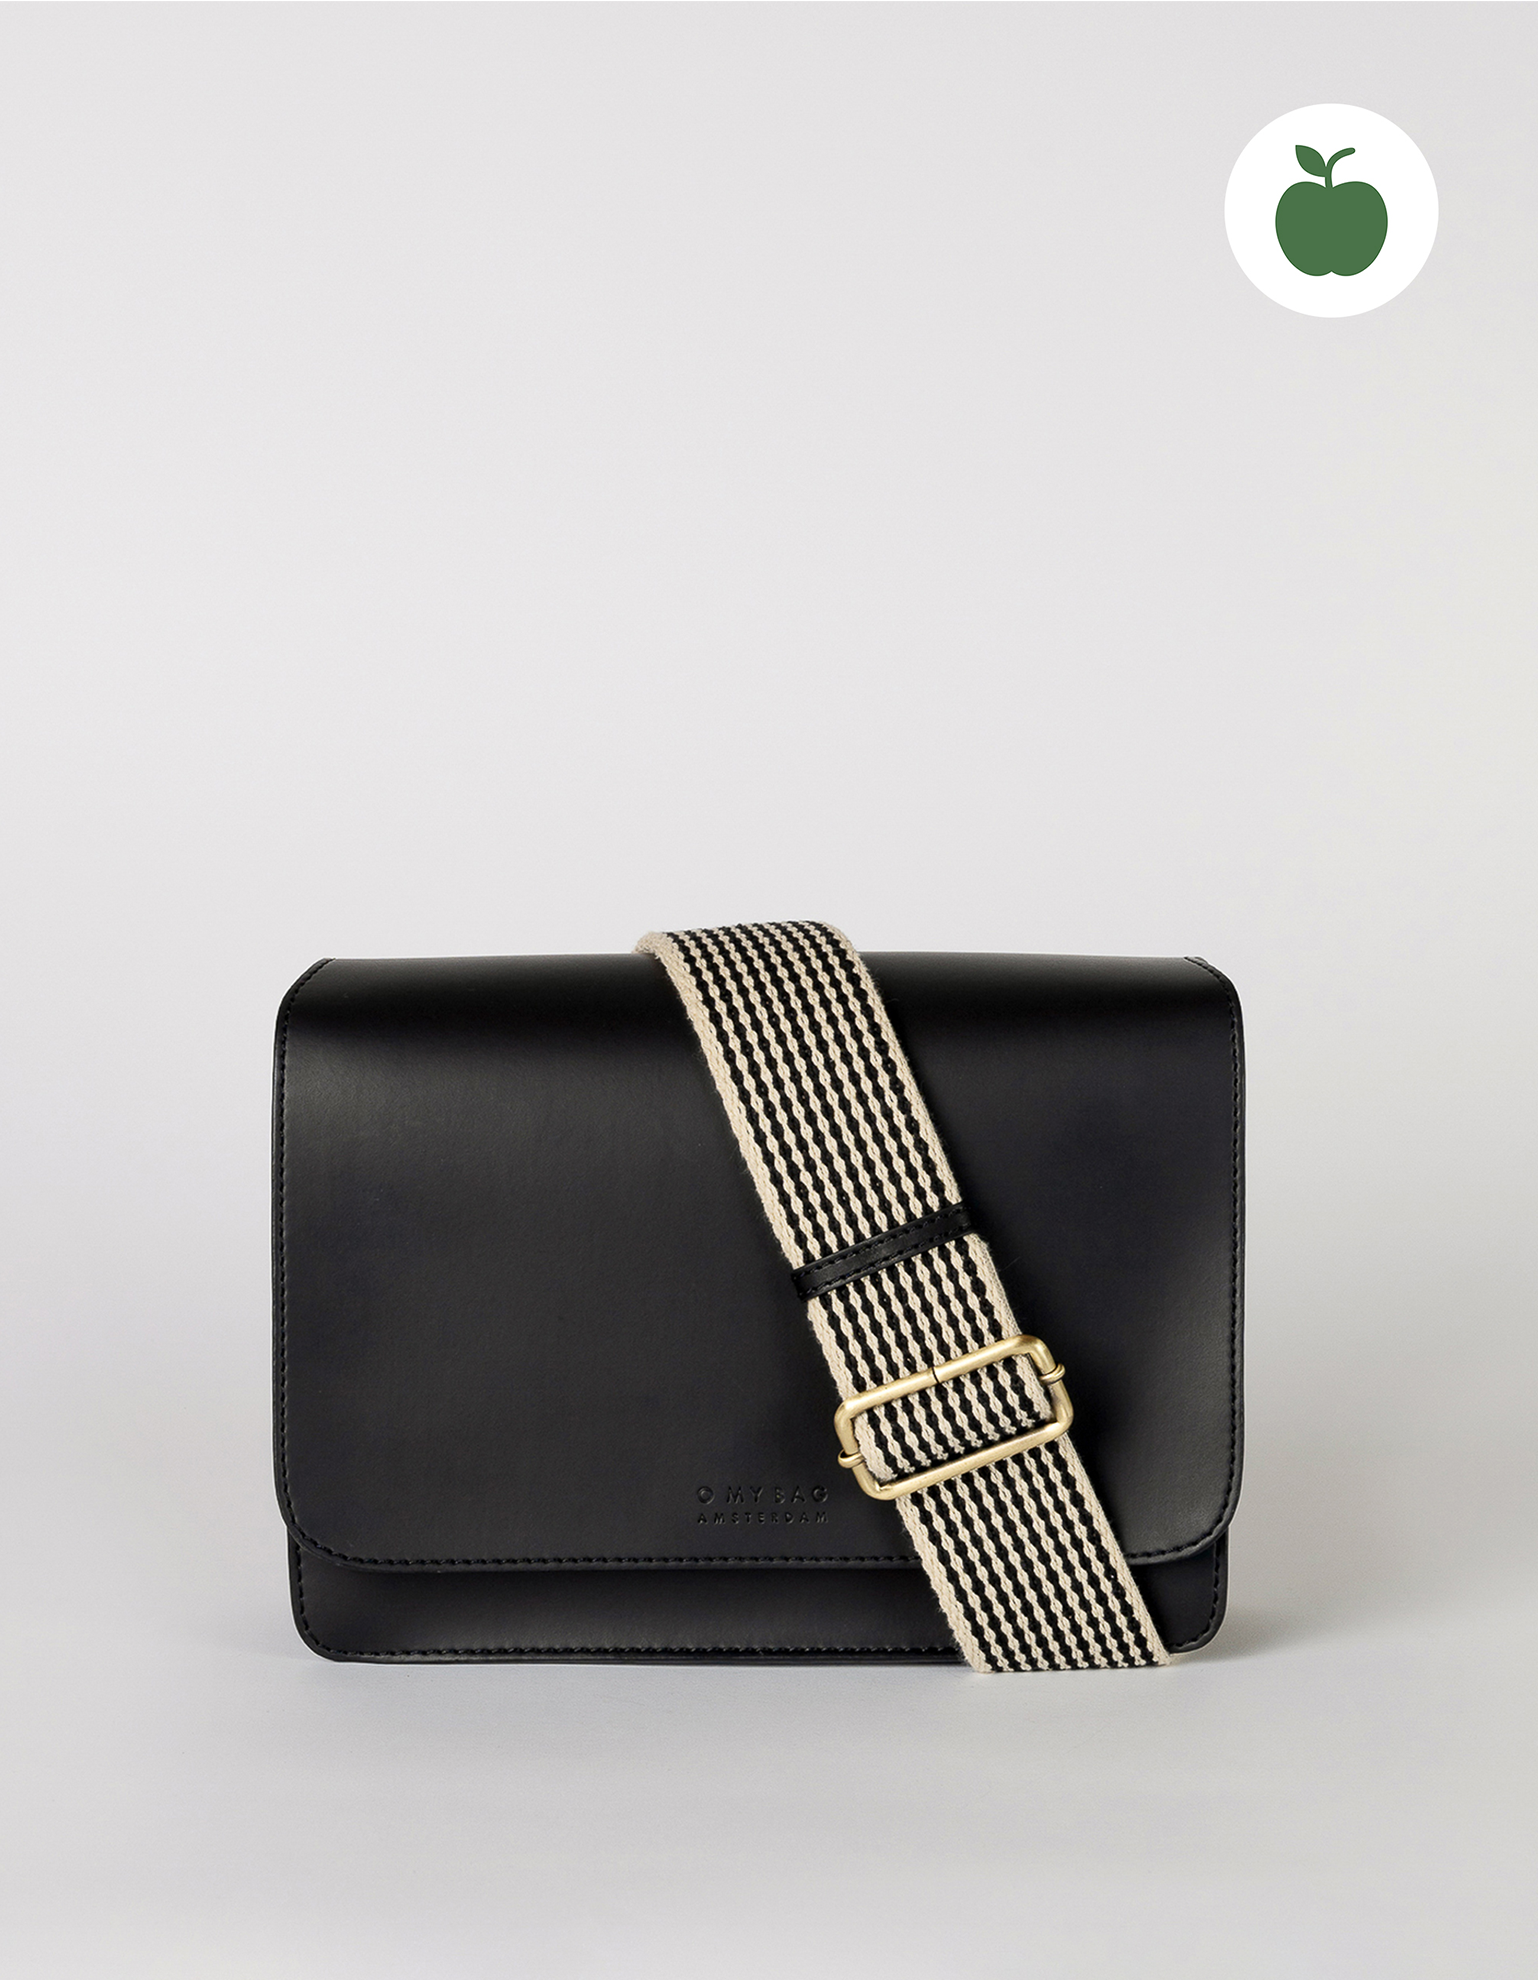 Audrey Apple Vegan Leather Rectangle Ladies Handbag, Front Product Image.